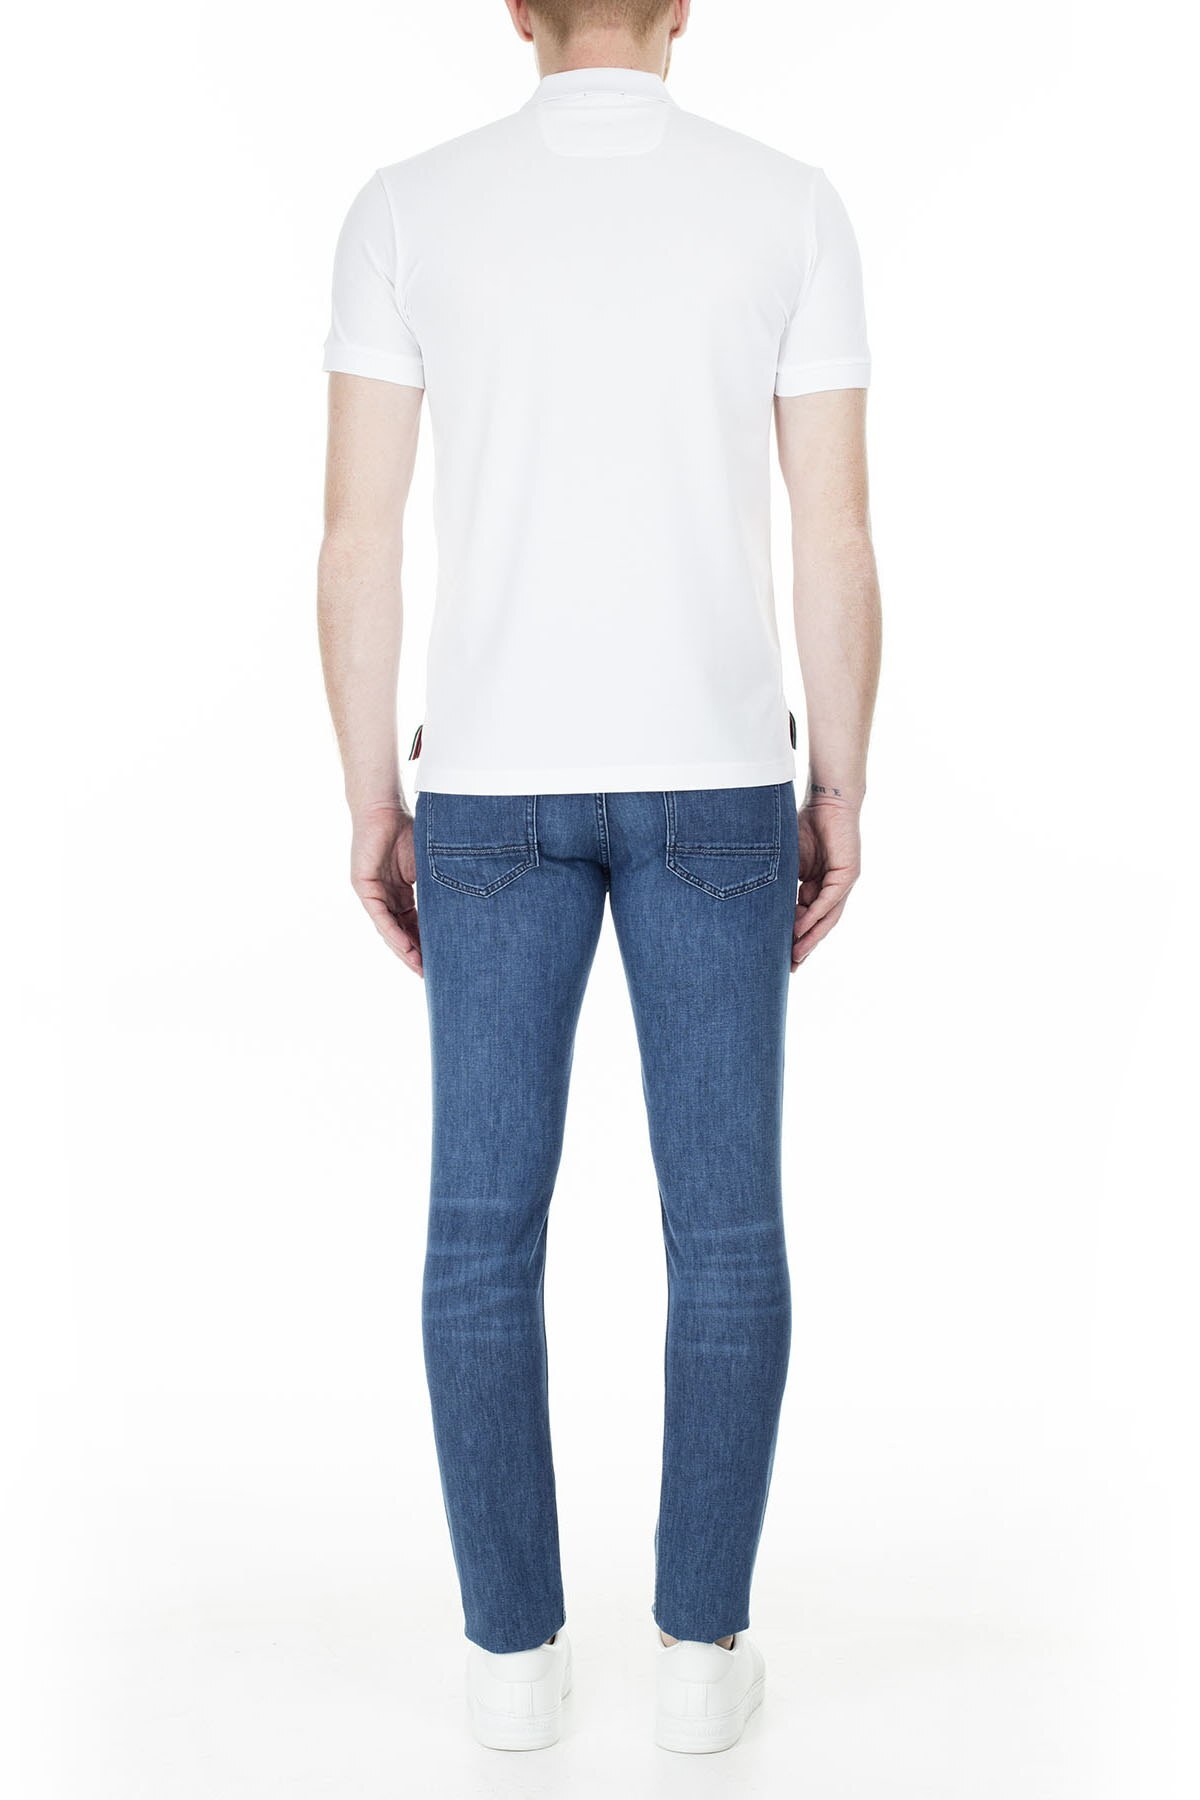 Hugo Boss Slim Fit Jeans Erkek Kot Pantolon 50426476 425 LACİVERT